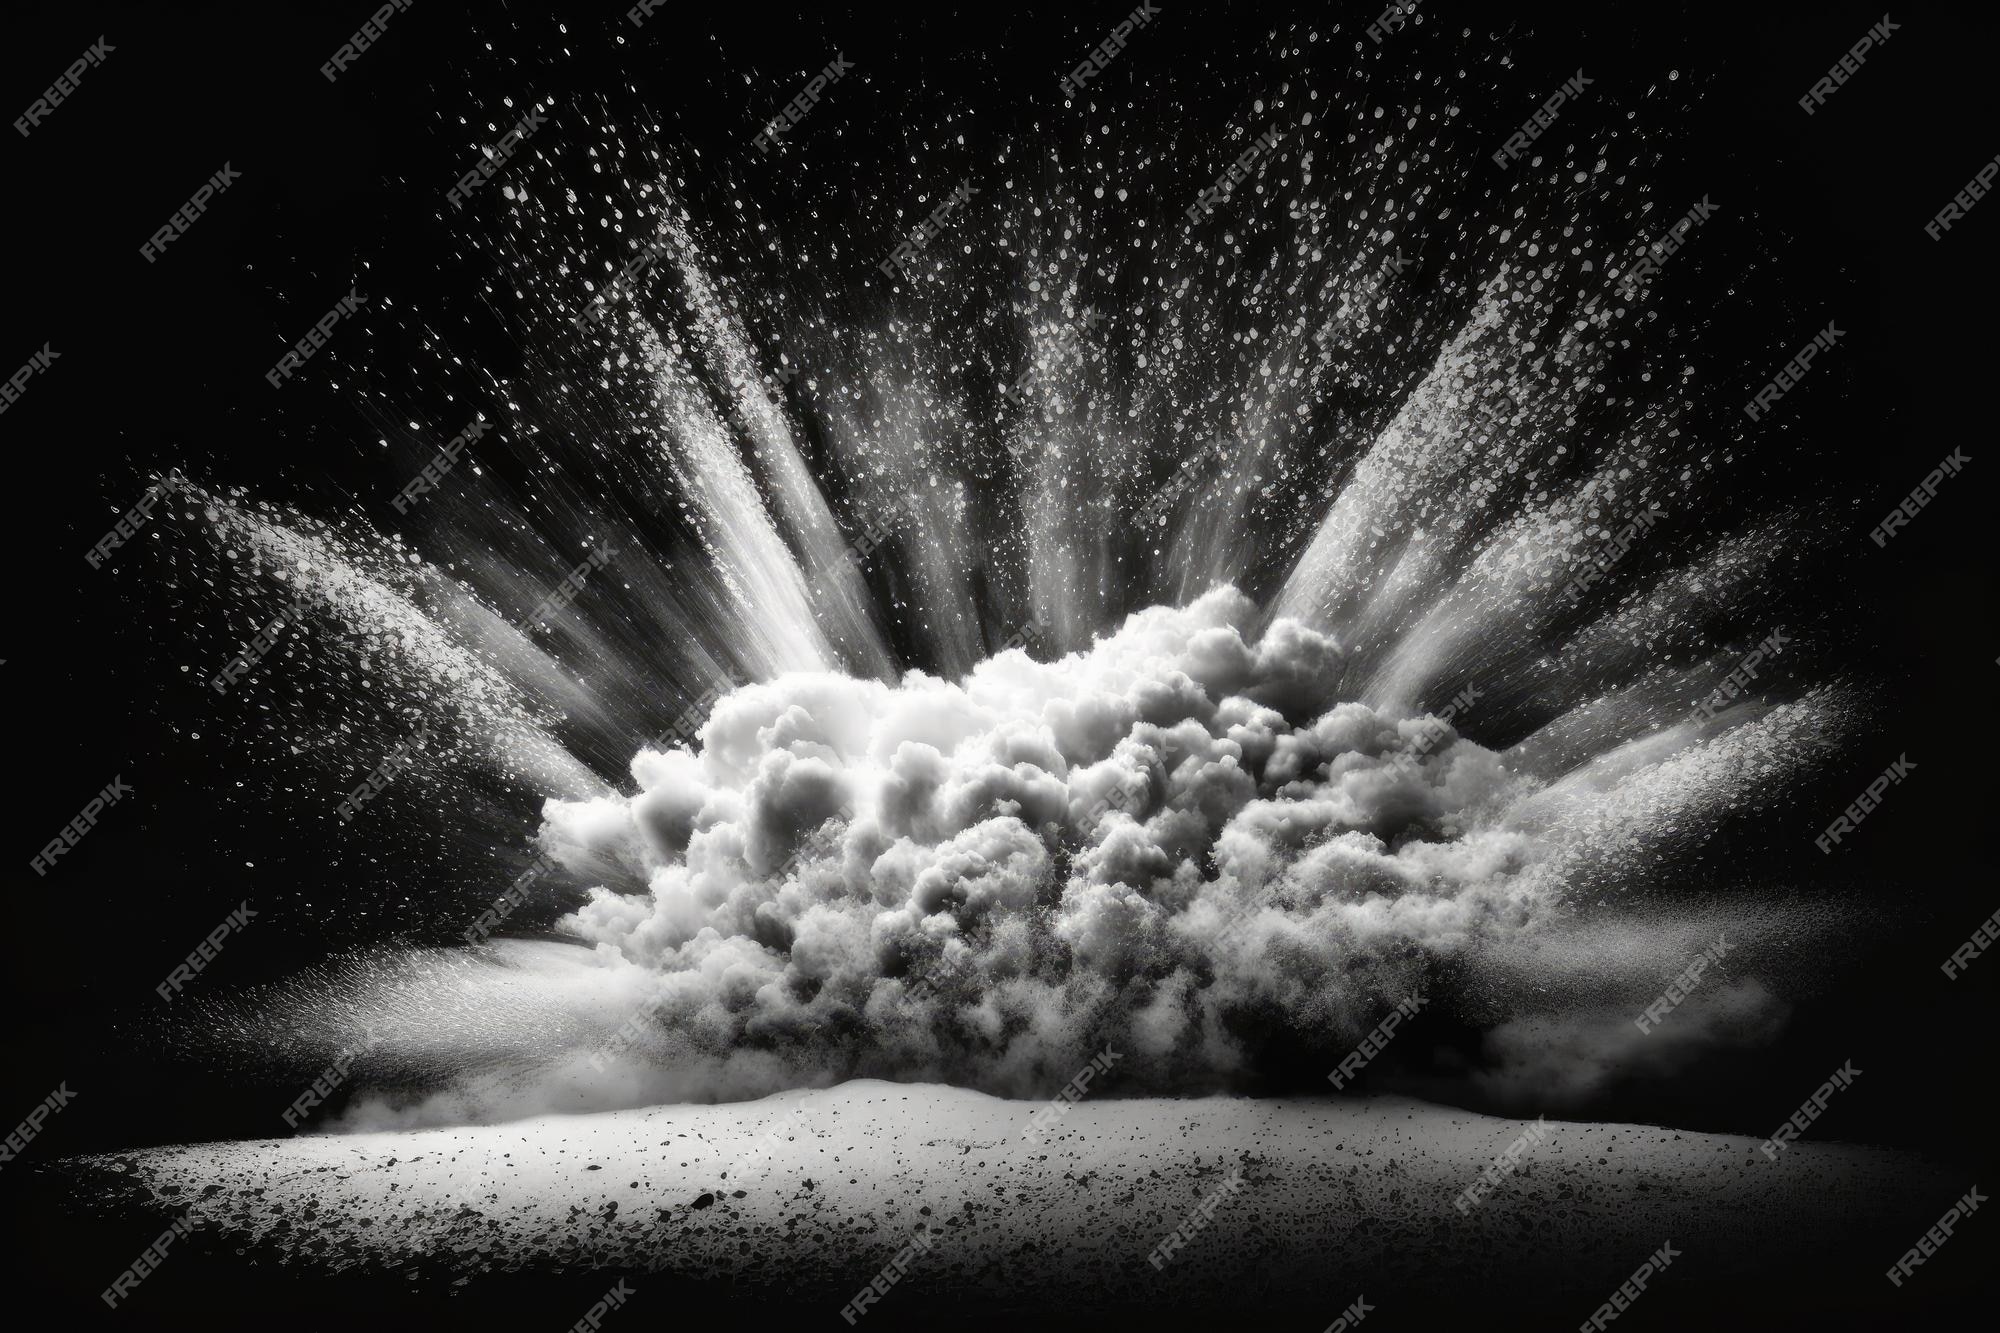 white-powder-snow-cloud-explosion-abstract-wide-horizontal-design-black-background_410516-2540.jpg